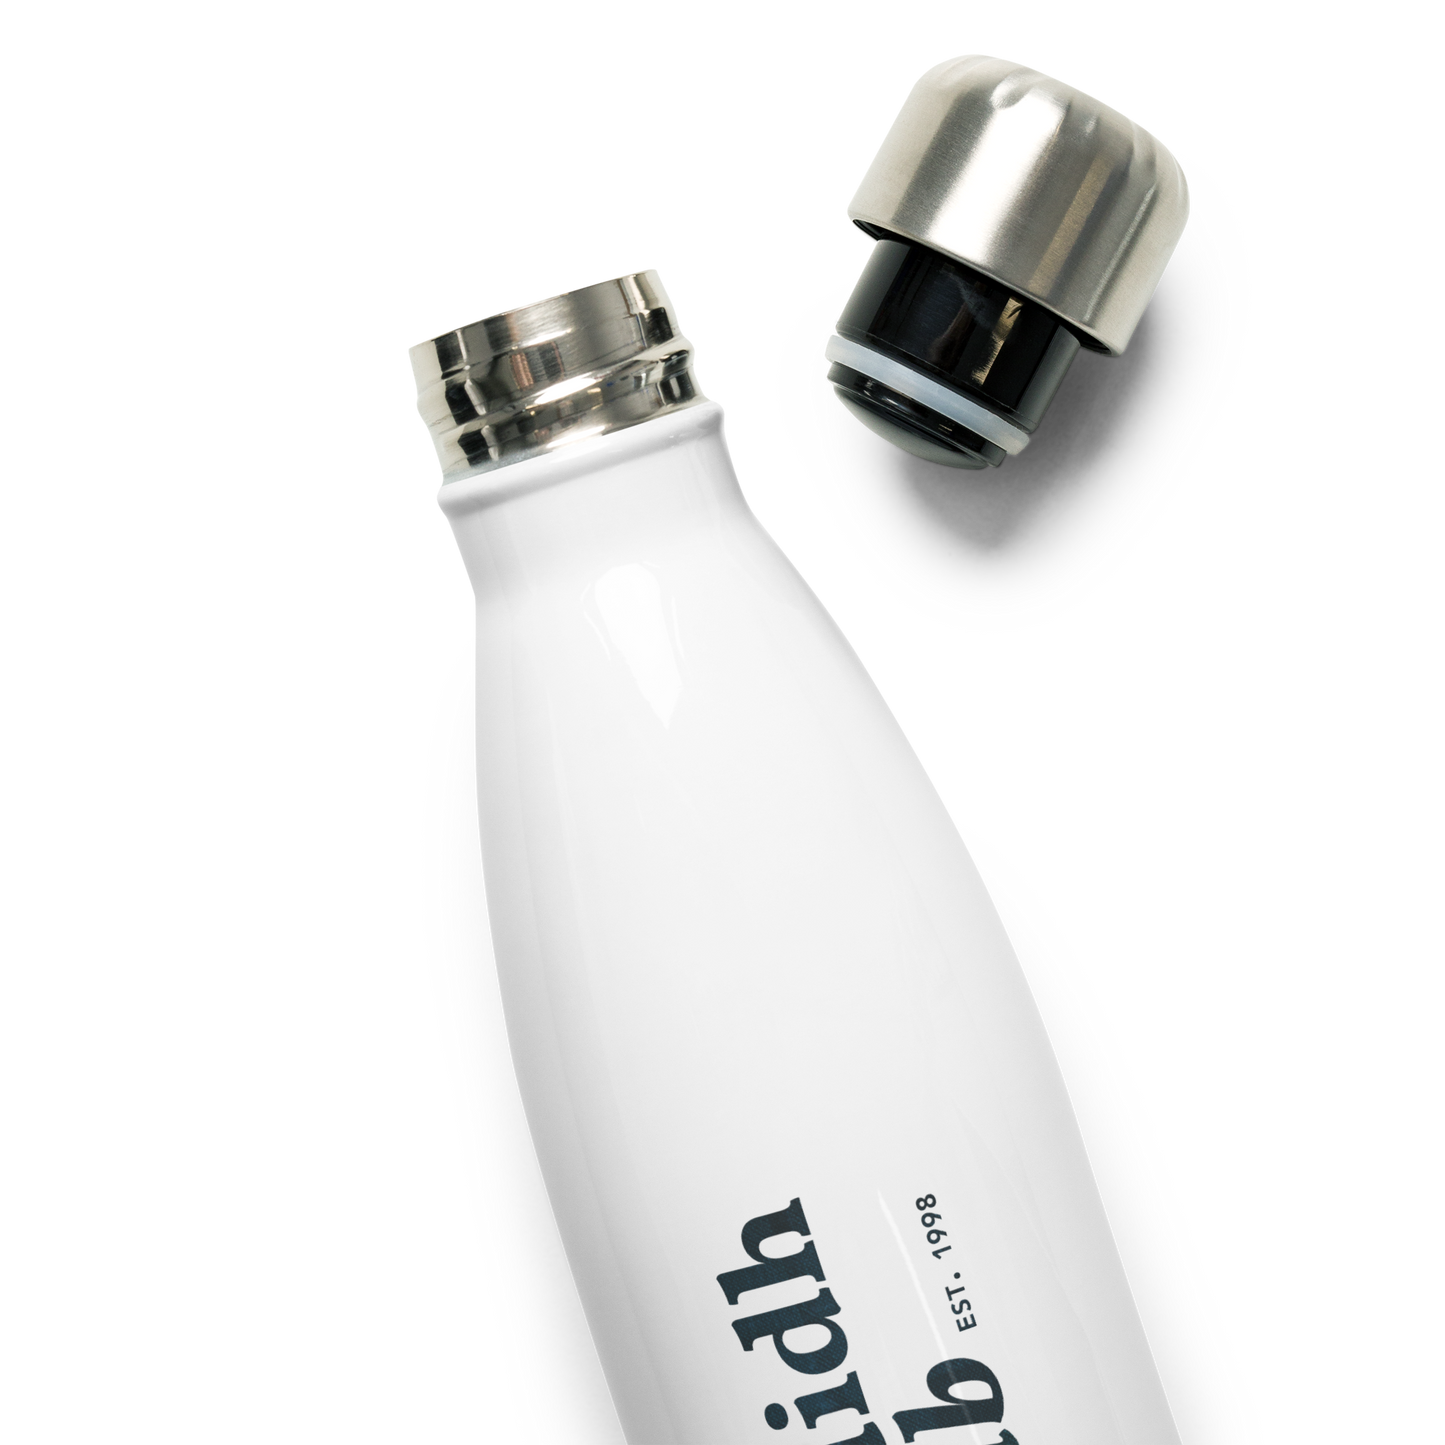 Water Bottle | Ceilidh Club